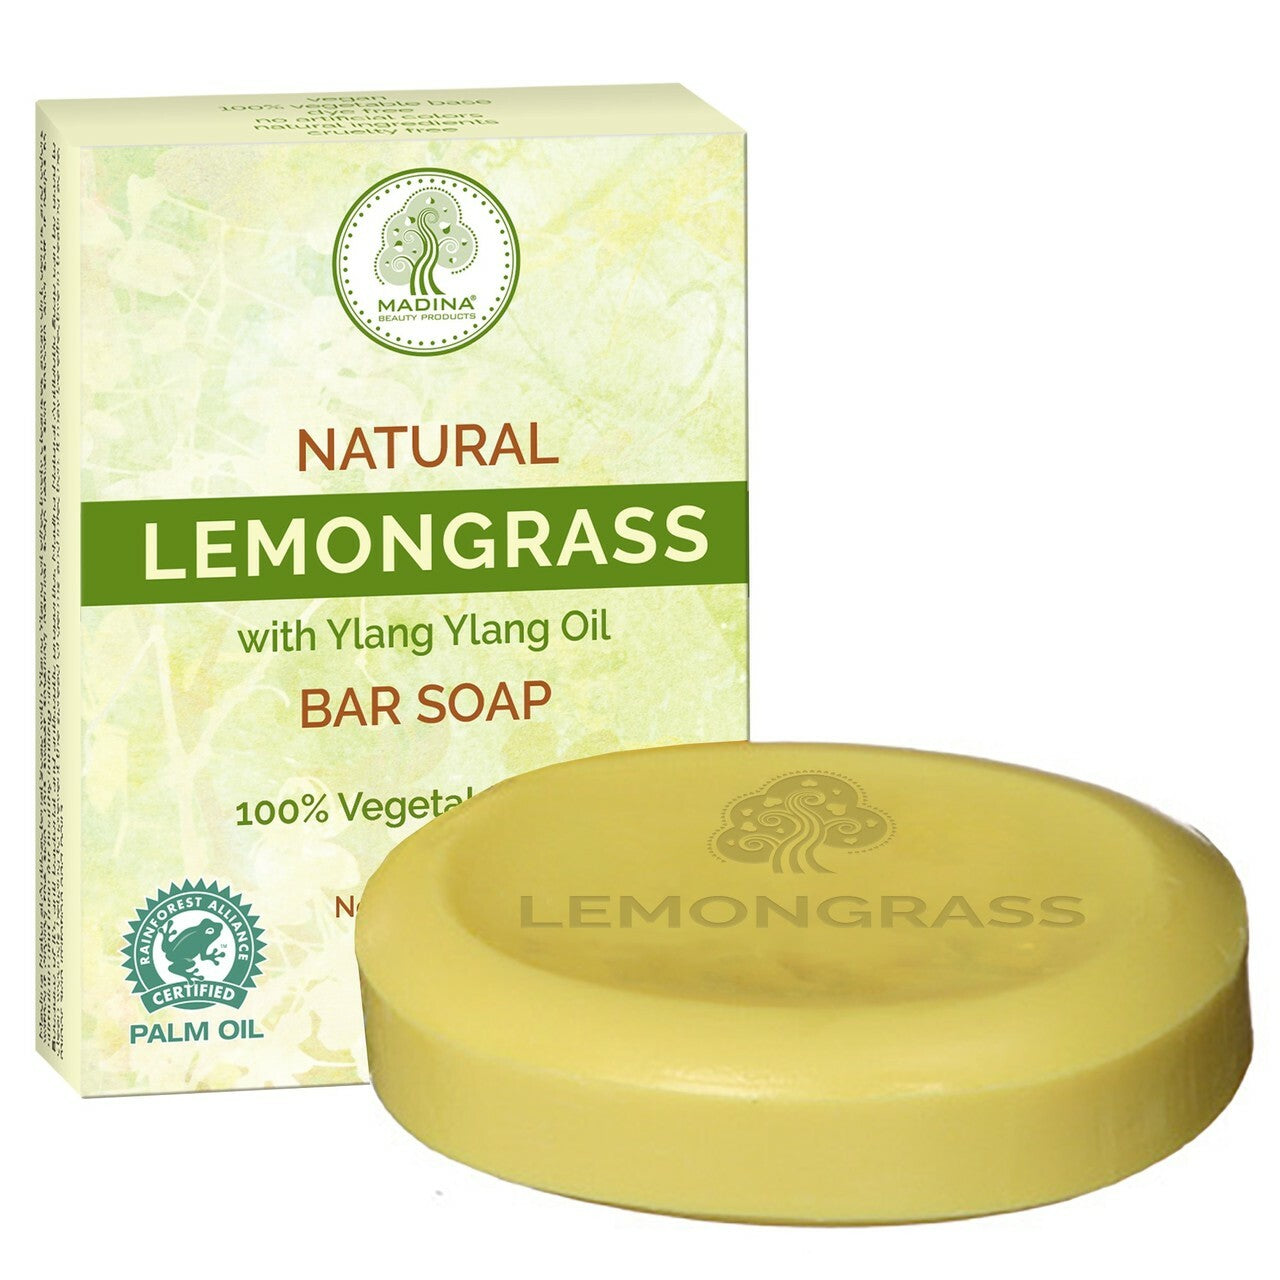 All-Natural Lemongrass Bar Soap